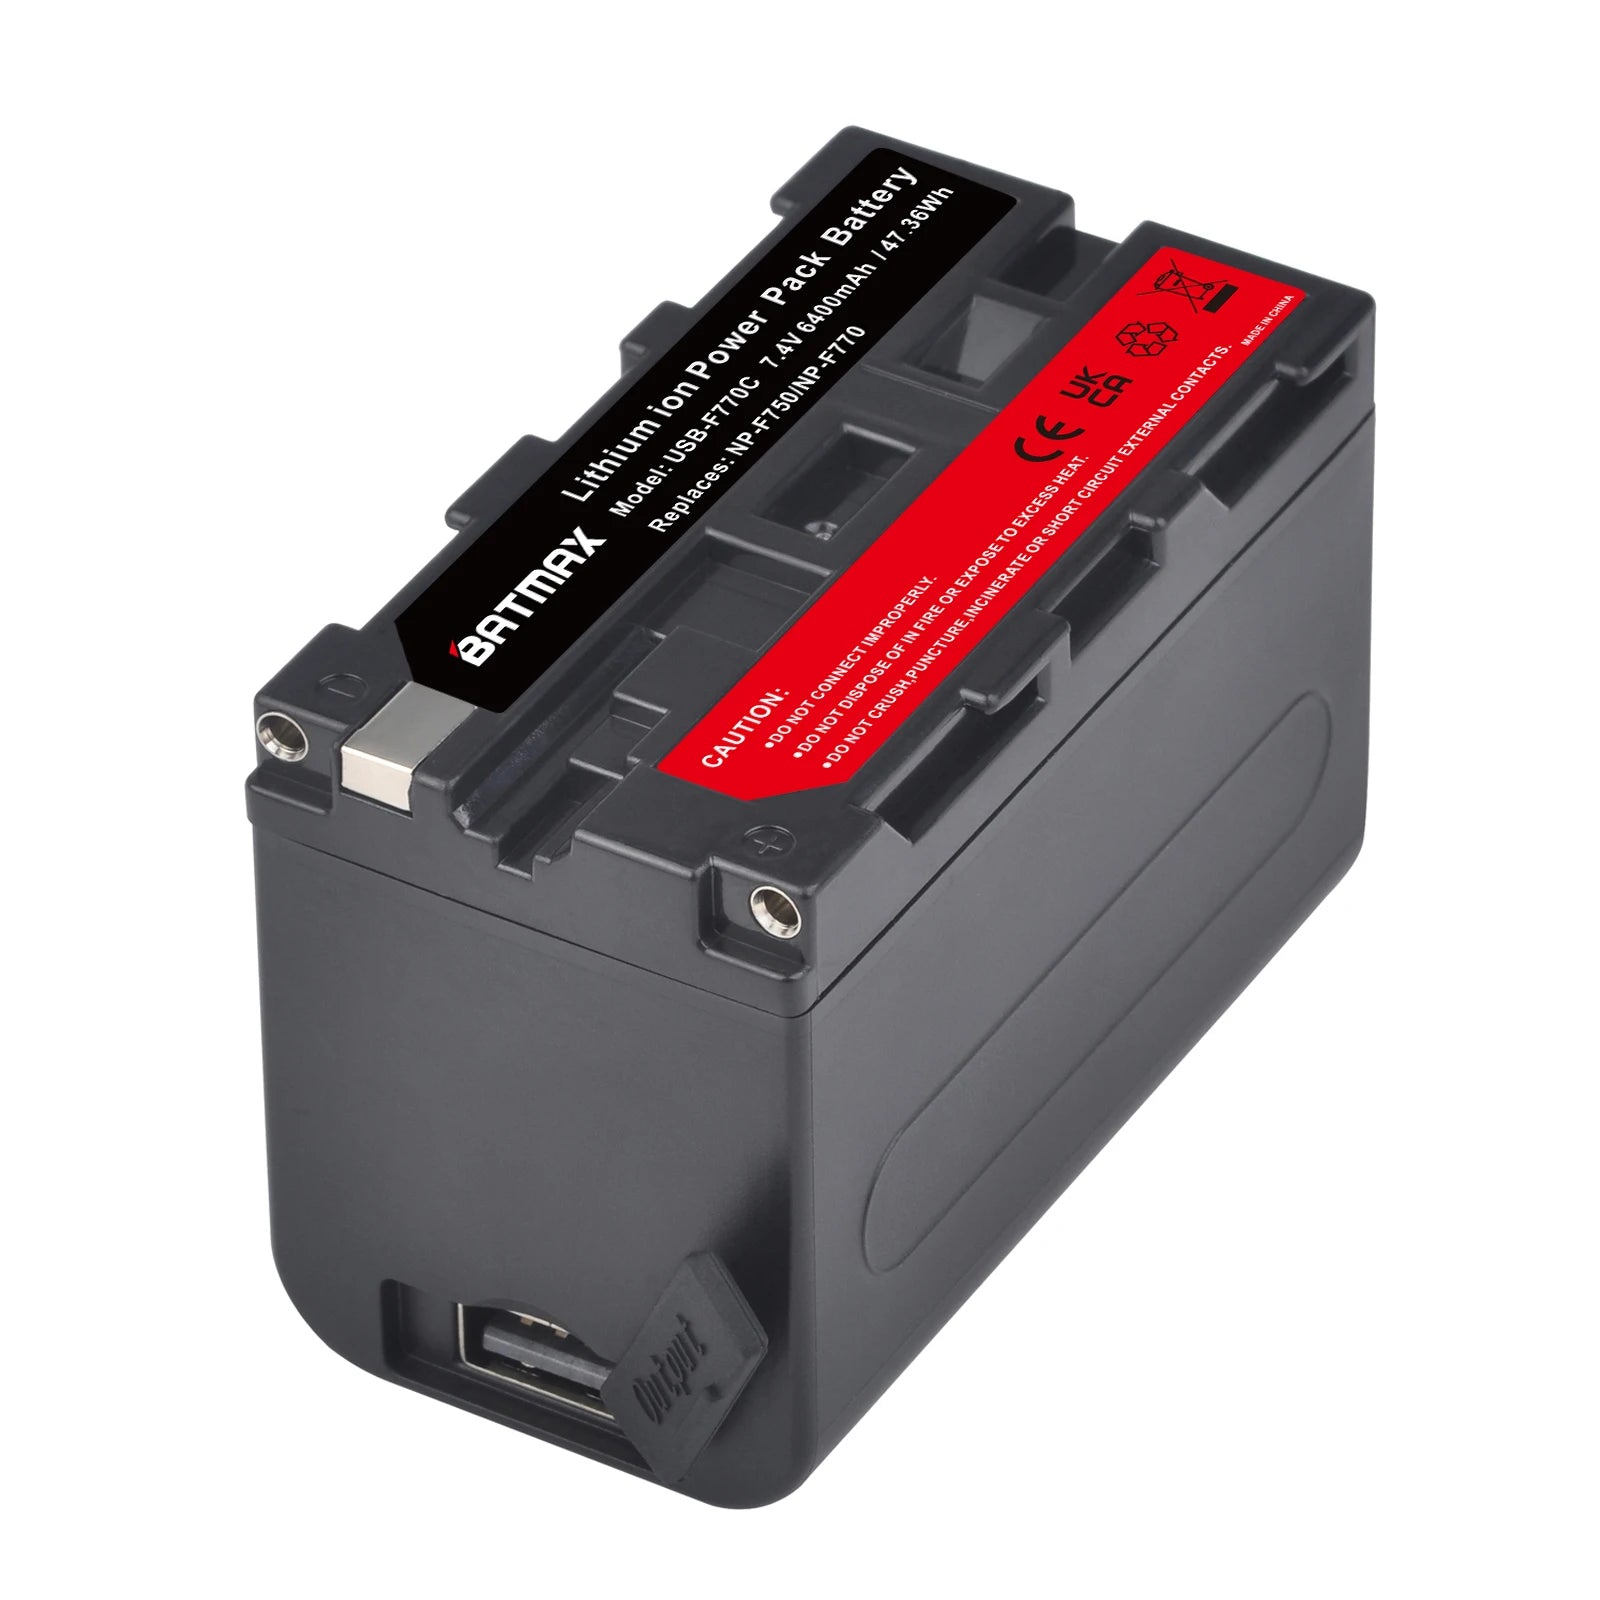 Batterie Batmax NP F750 NP F770 6400mAh avec indicateur LED + recharge USB Type C Port pour Sony NP F960 F970 NP-F550 CCD-TRV58 V1J z1...